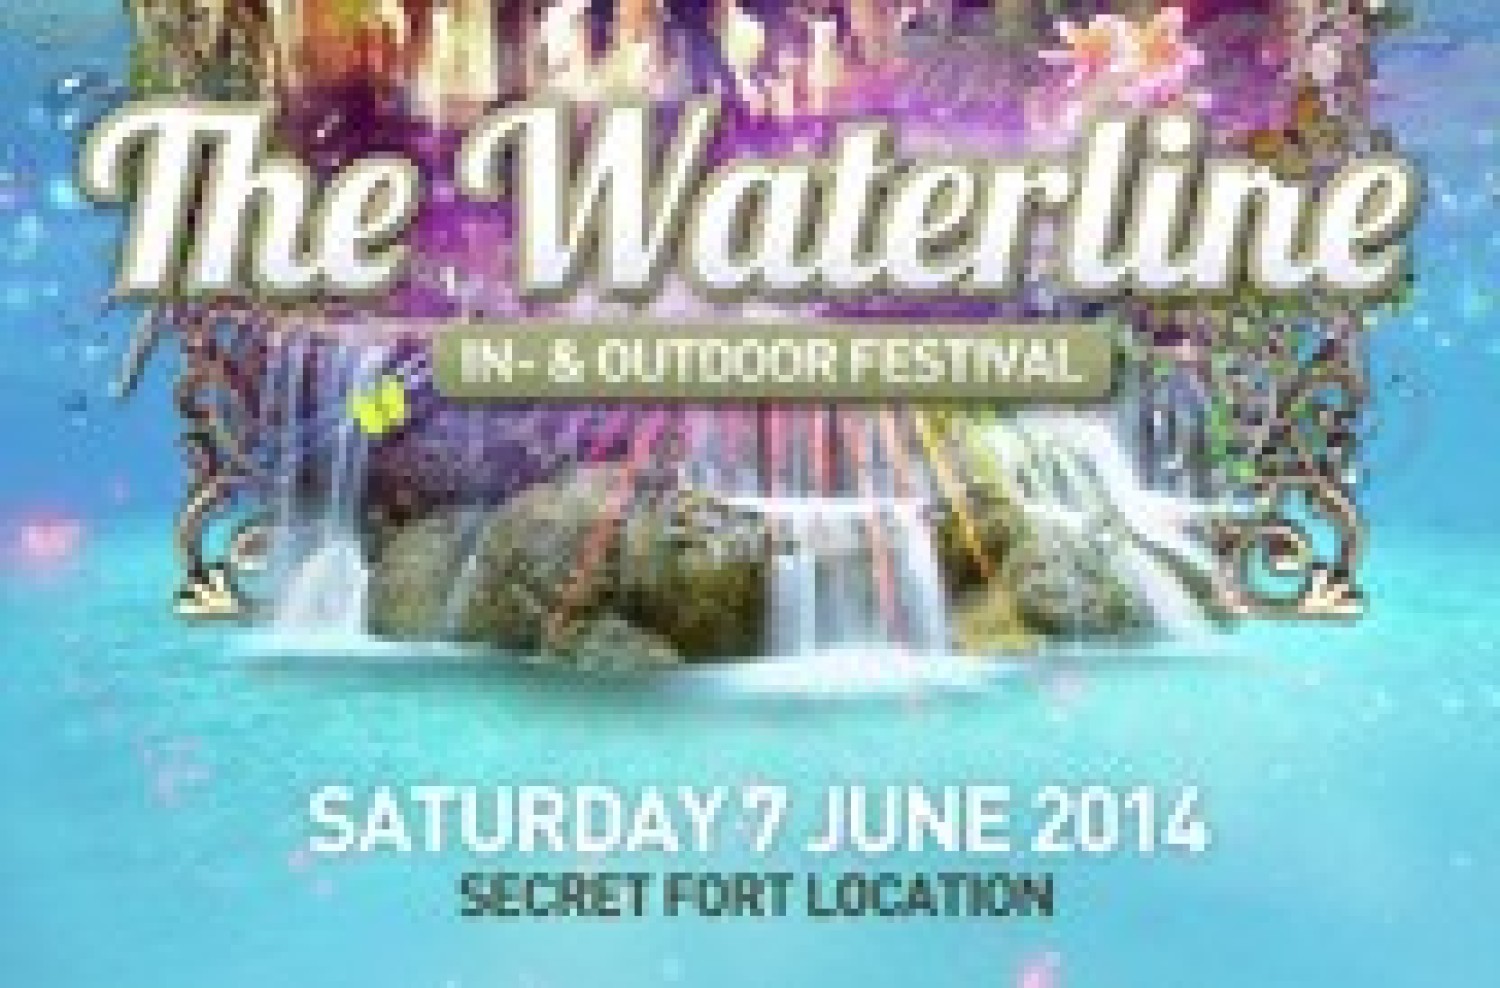 Party nieuws: The Waterline in- en outdoor Festival by Full Moon